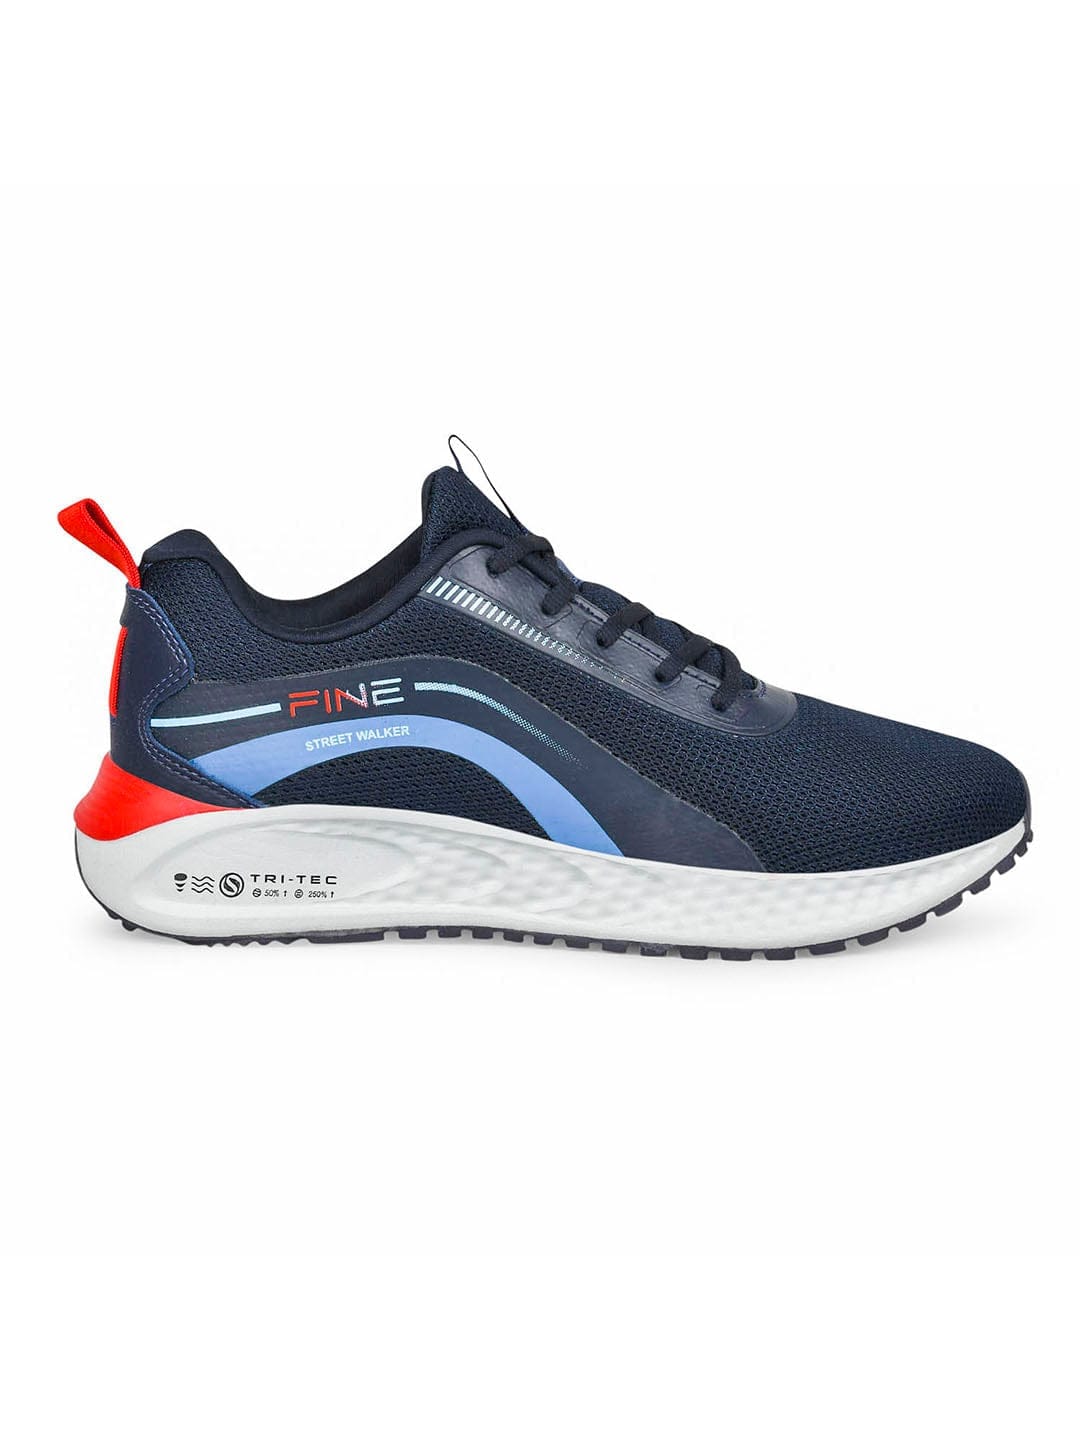 Buy FINE Men's Running Shoes online | Campus Shoes